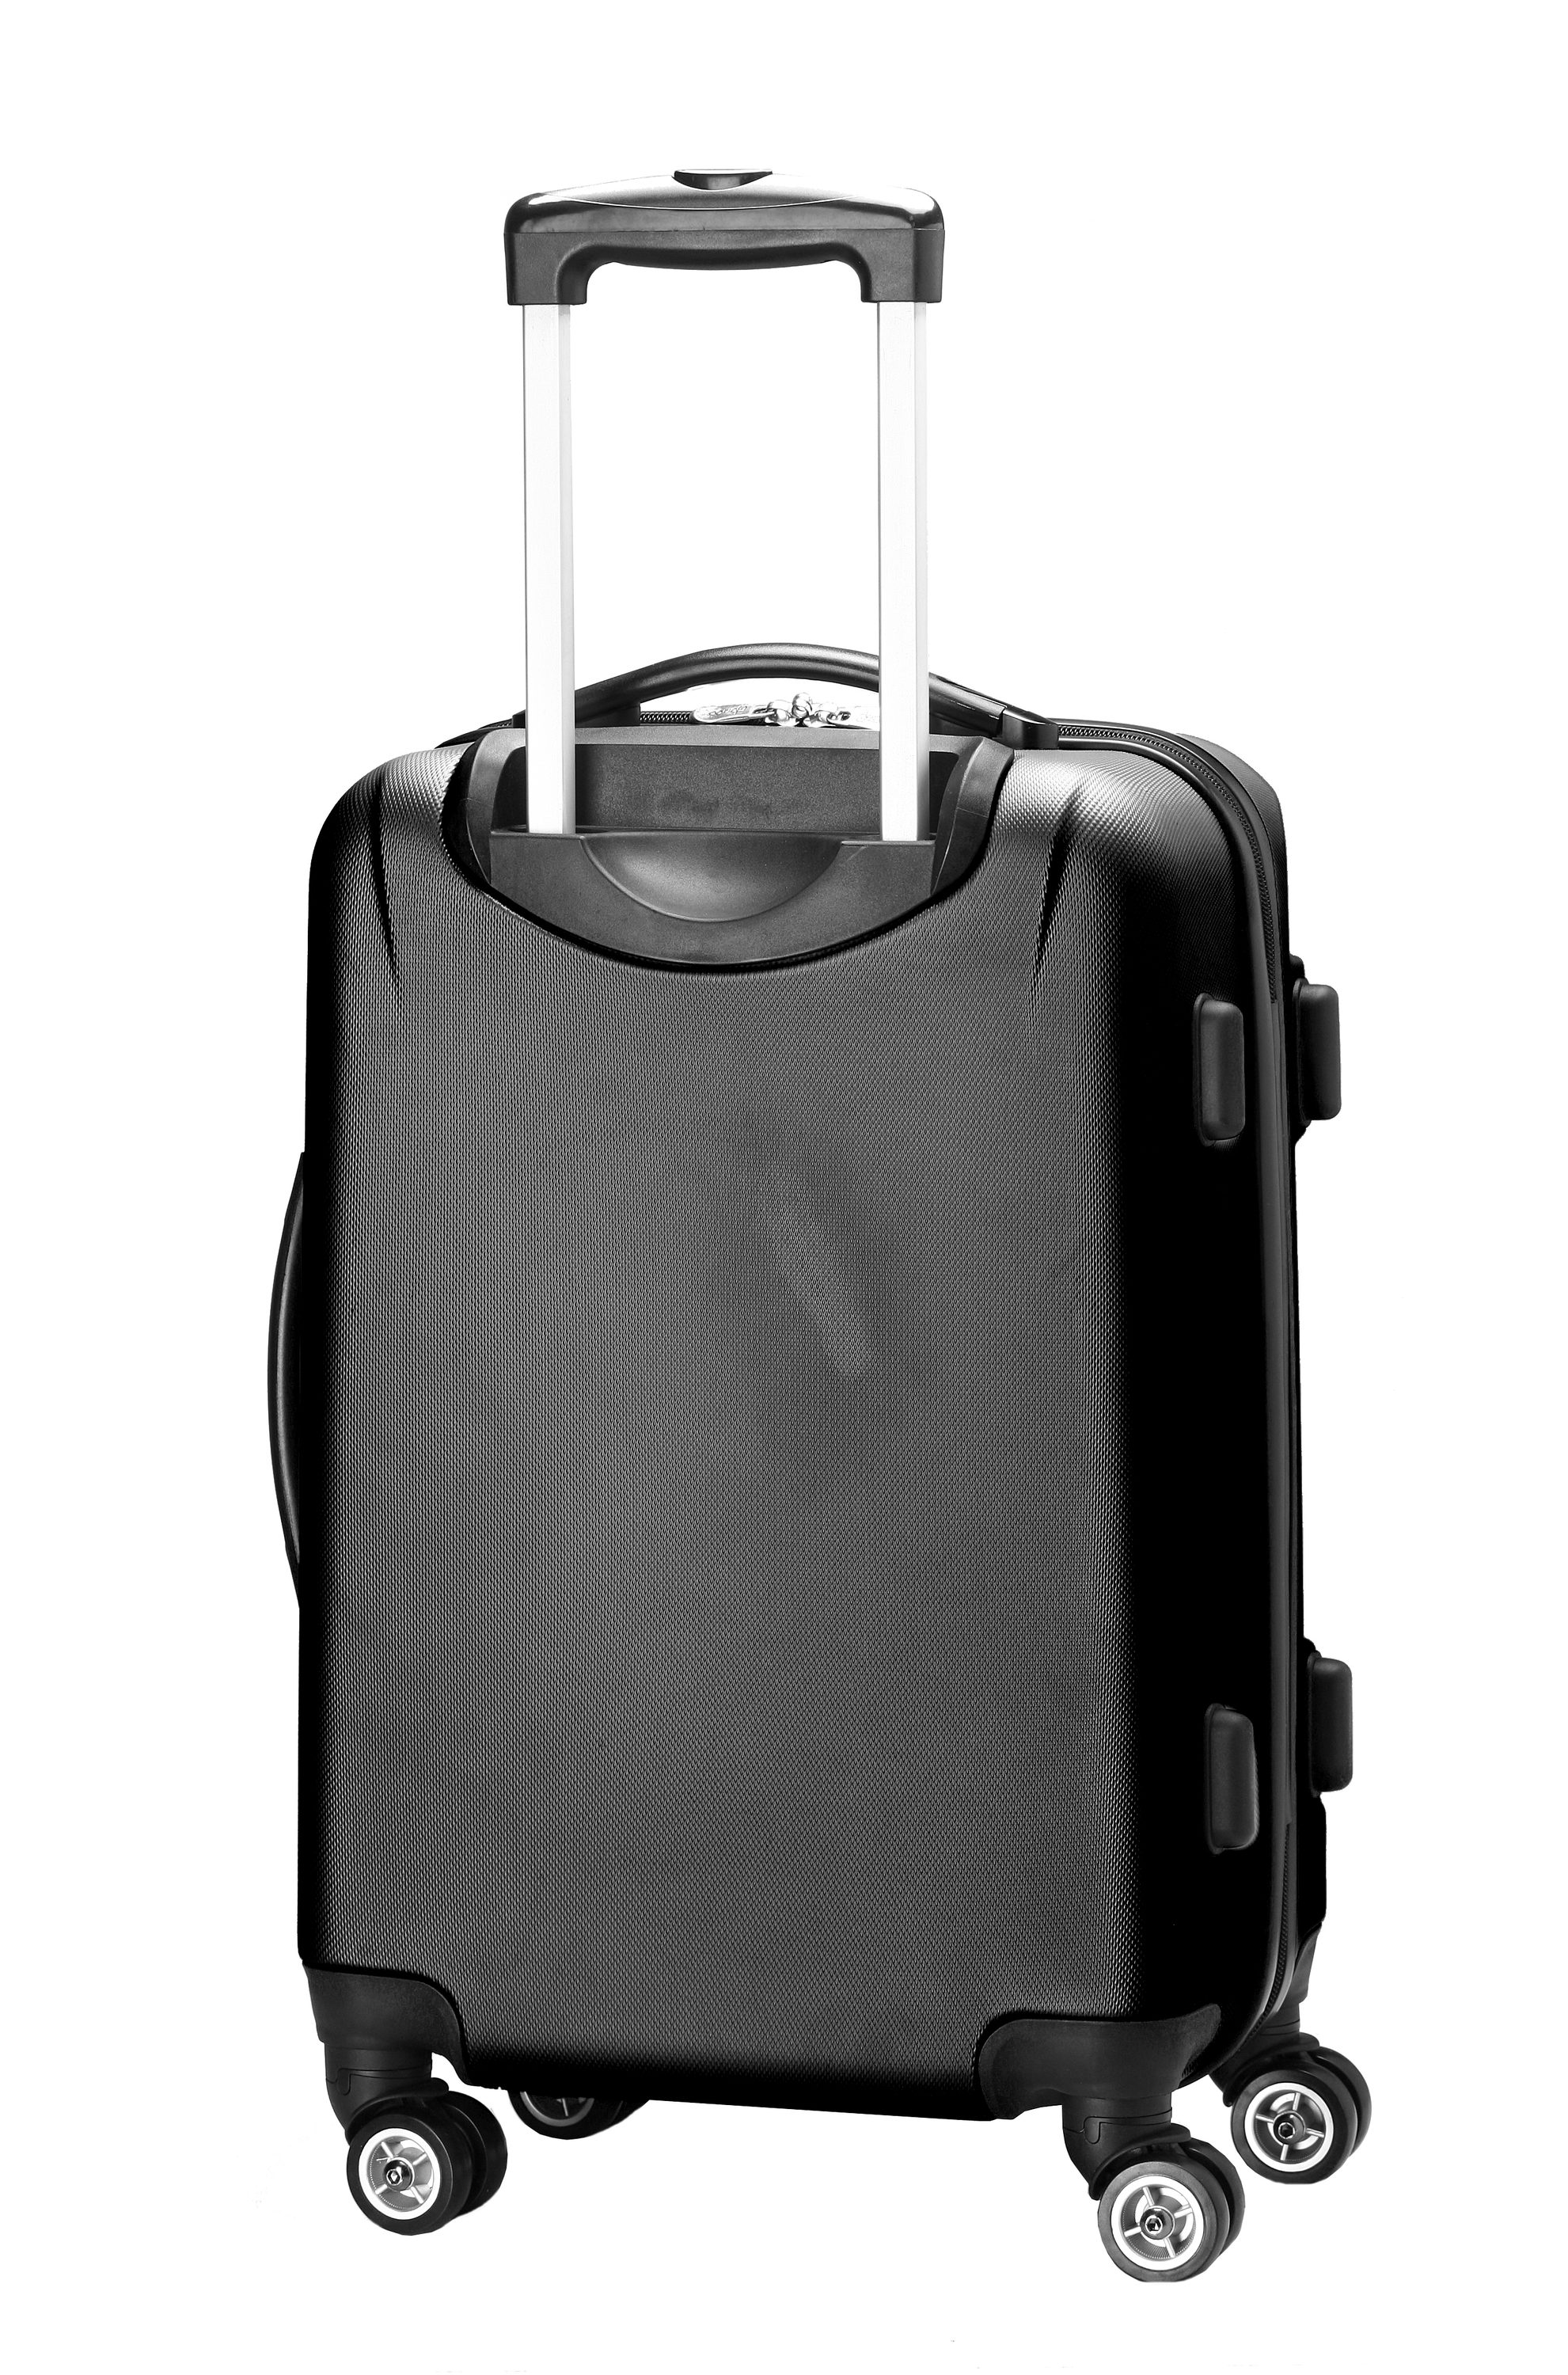 MLB Philadelphia Phillies Rolling Travel Luggage Laptop Overnight